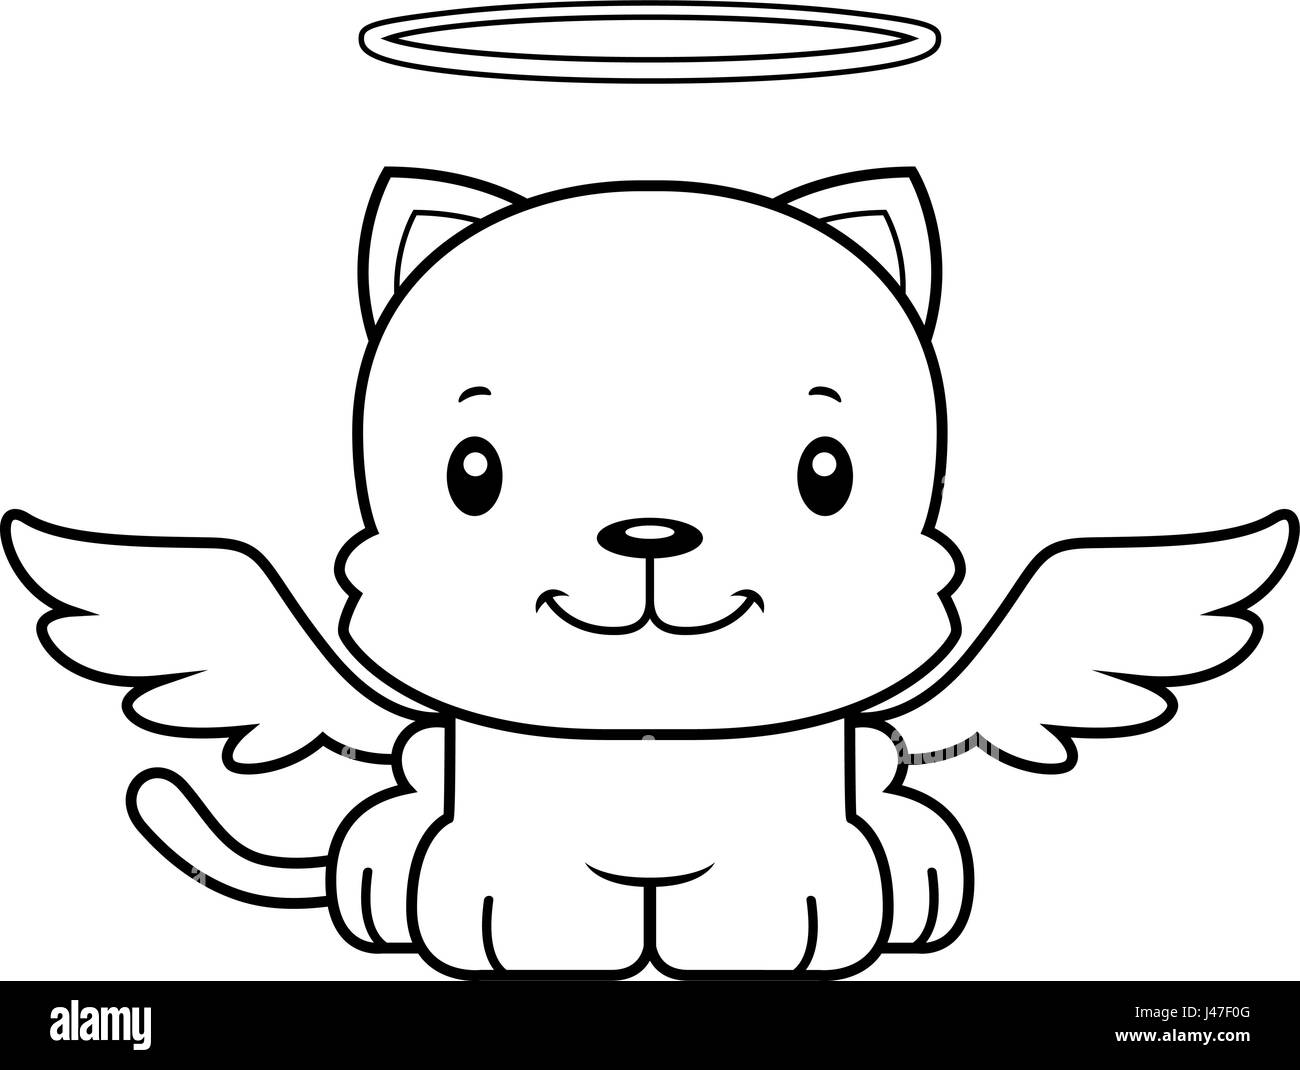 A cartoon angel kitten smiling. Stock Vector